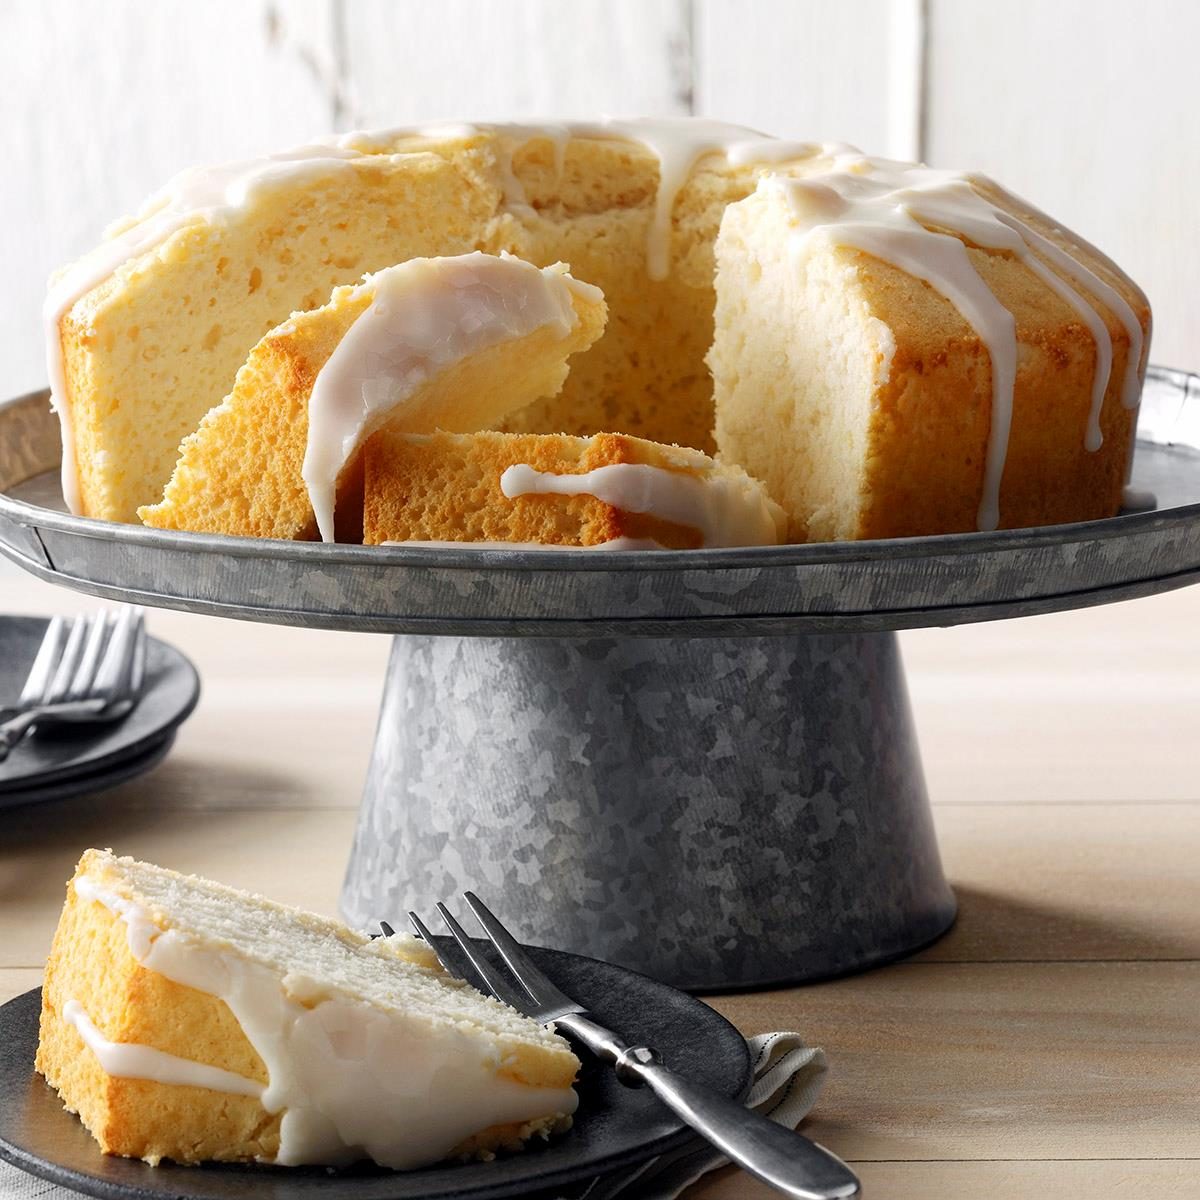 Glazed Lemon Chiffon Cake Recipe: How to Make It